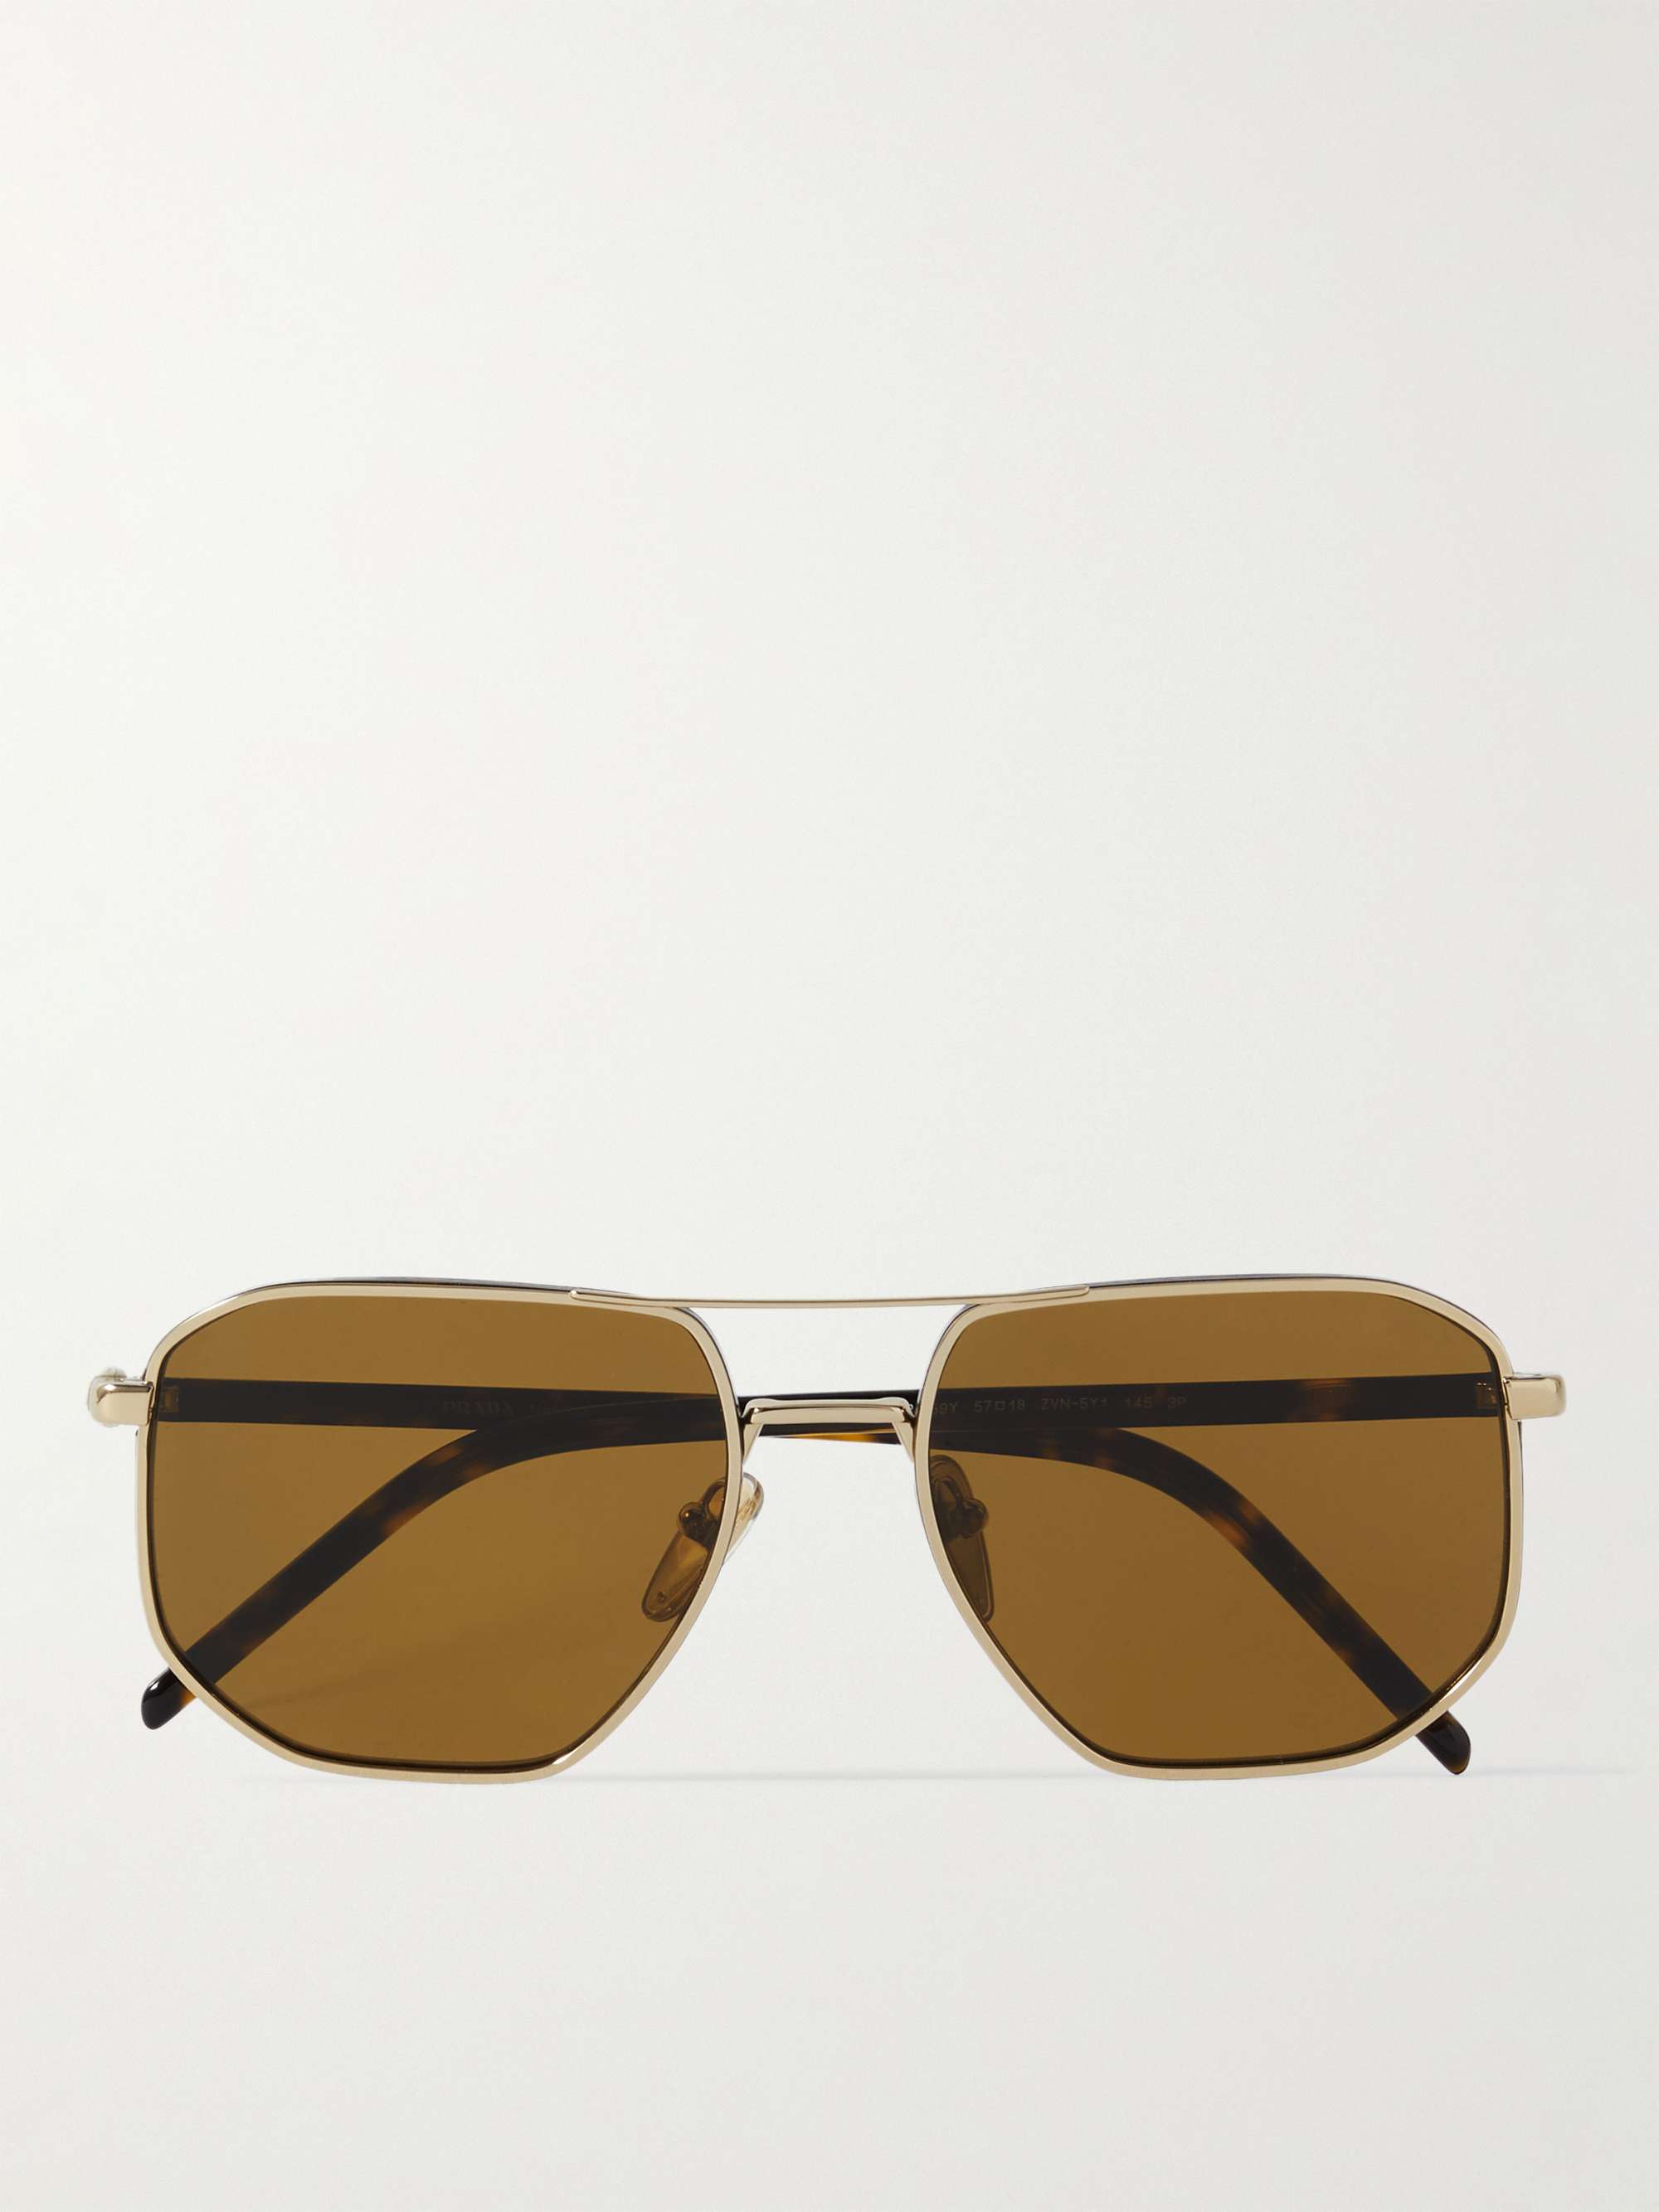 PRADA EYEWEAR Aviator-Style Gold-Tone and Tortoiseshell Acetate Sunglasses  | MR PORTER